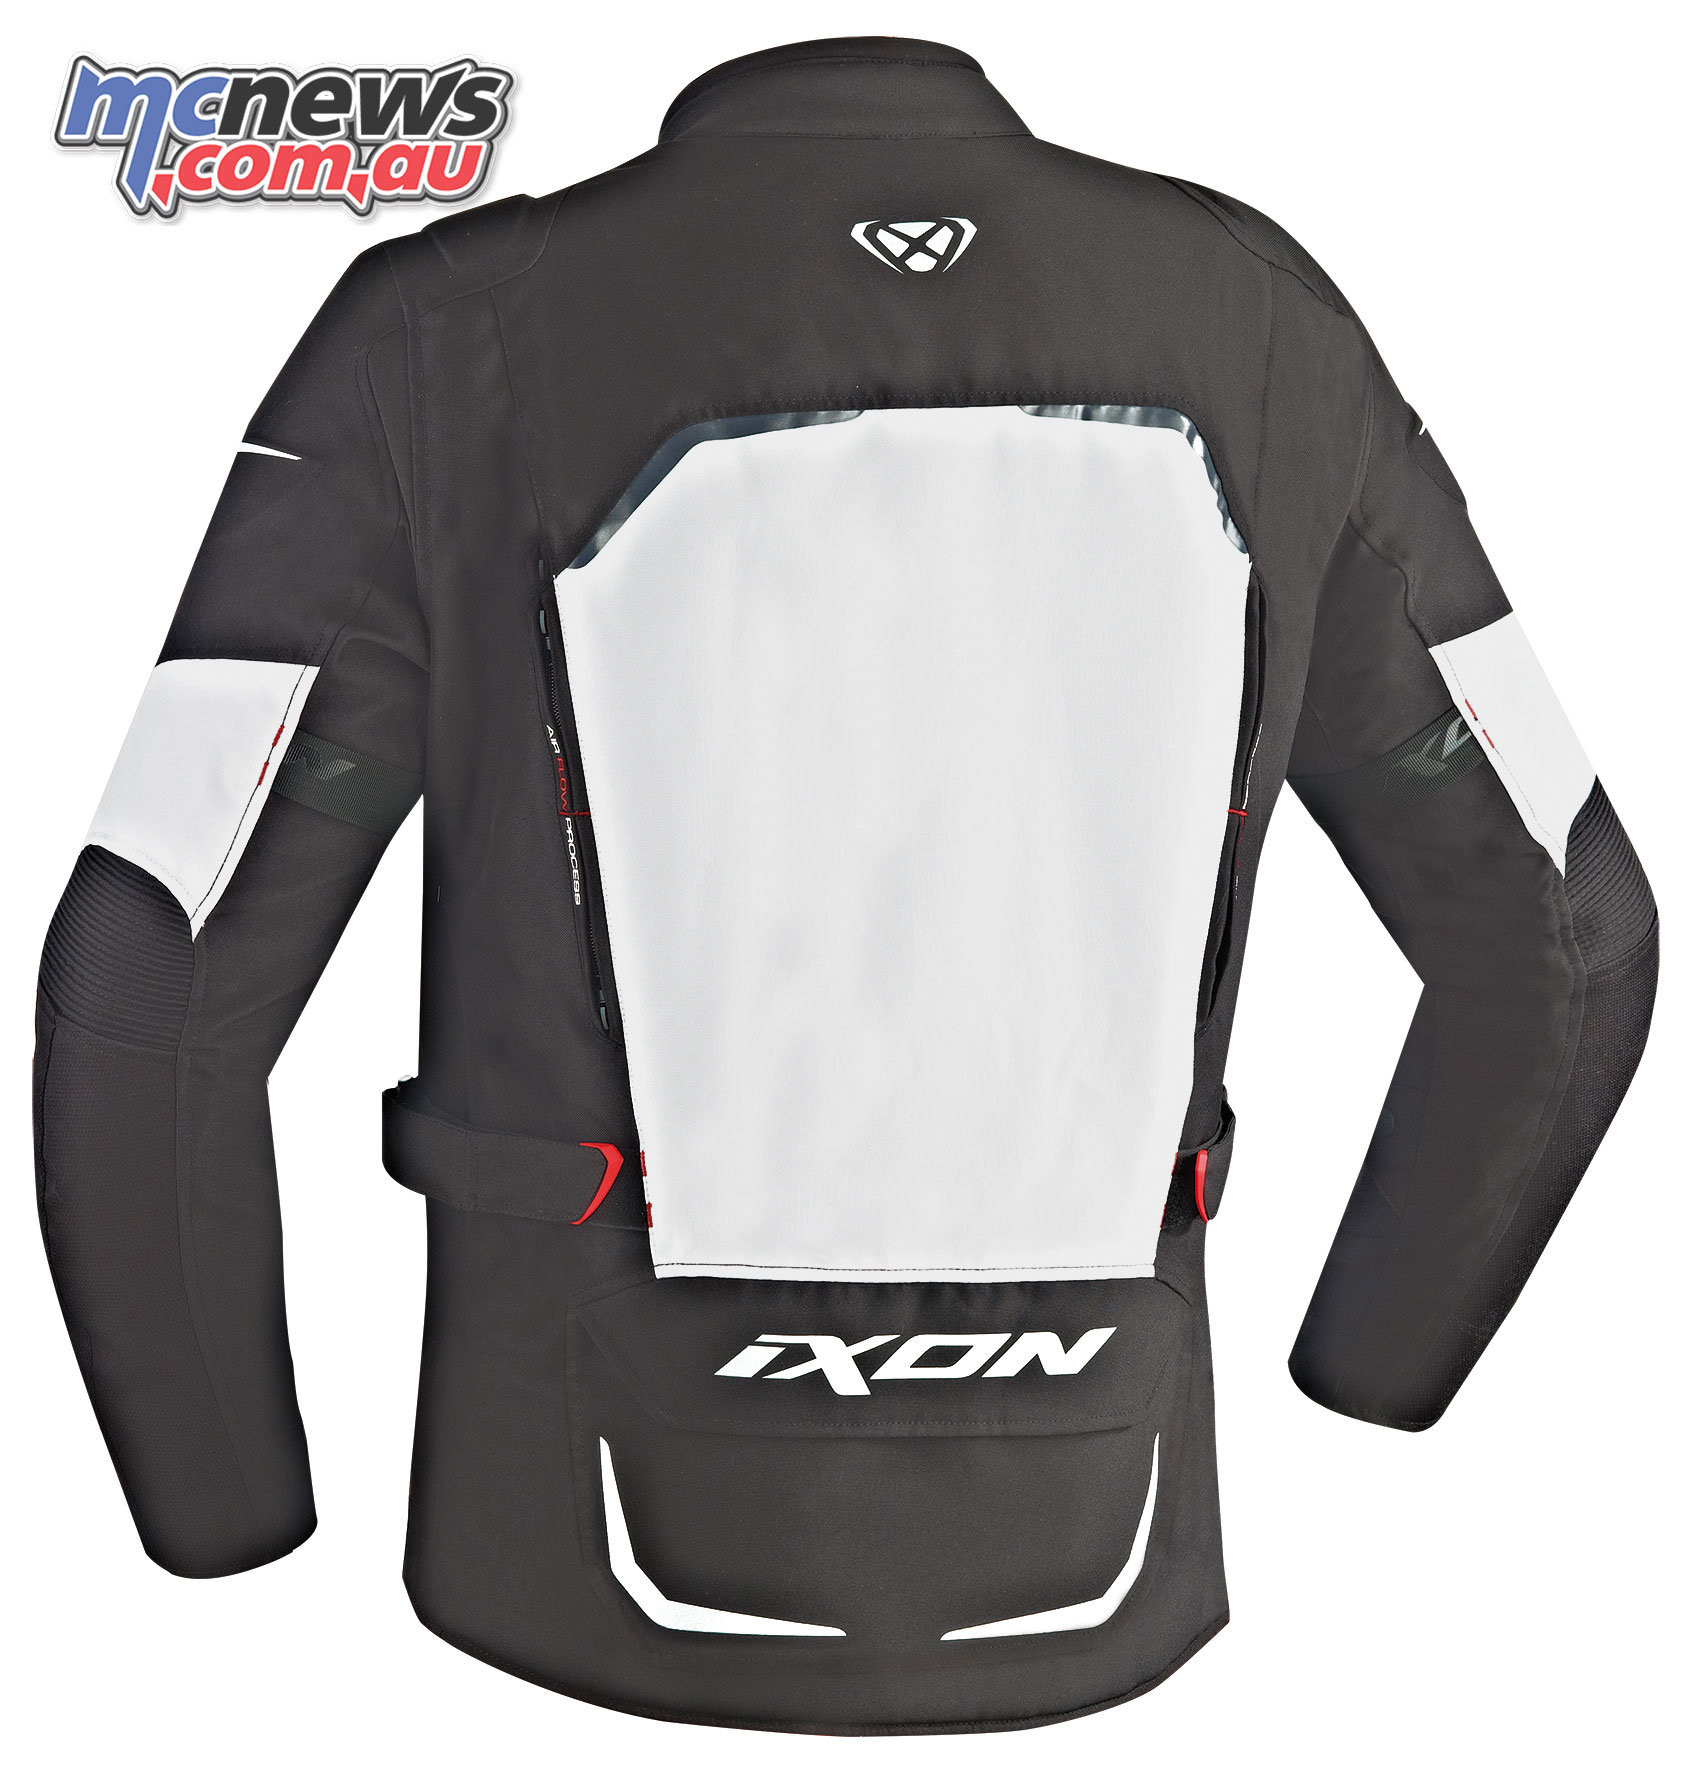 Ixon CrossTour Jacket and Pants | Versatile tour gear | MCNews